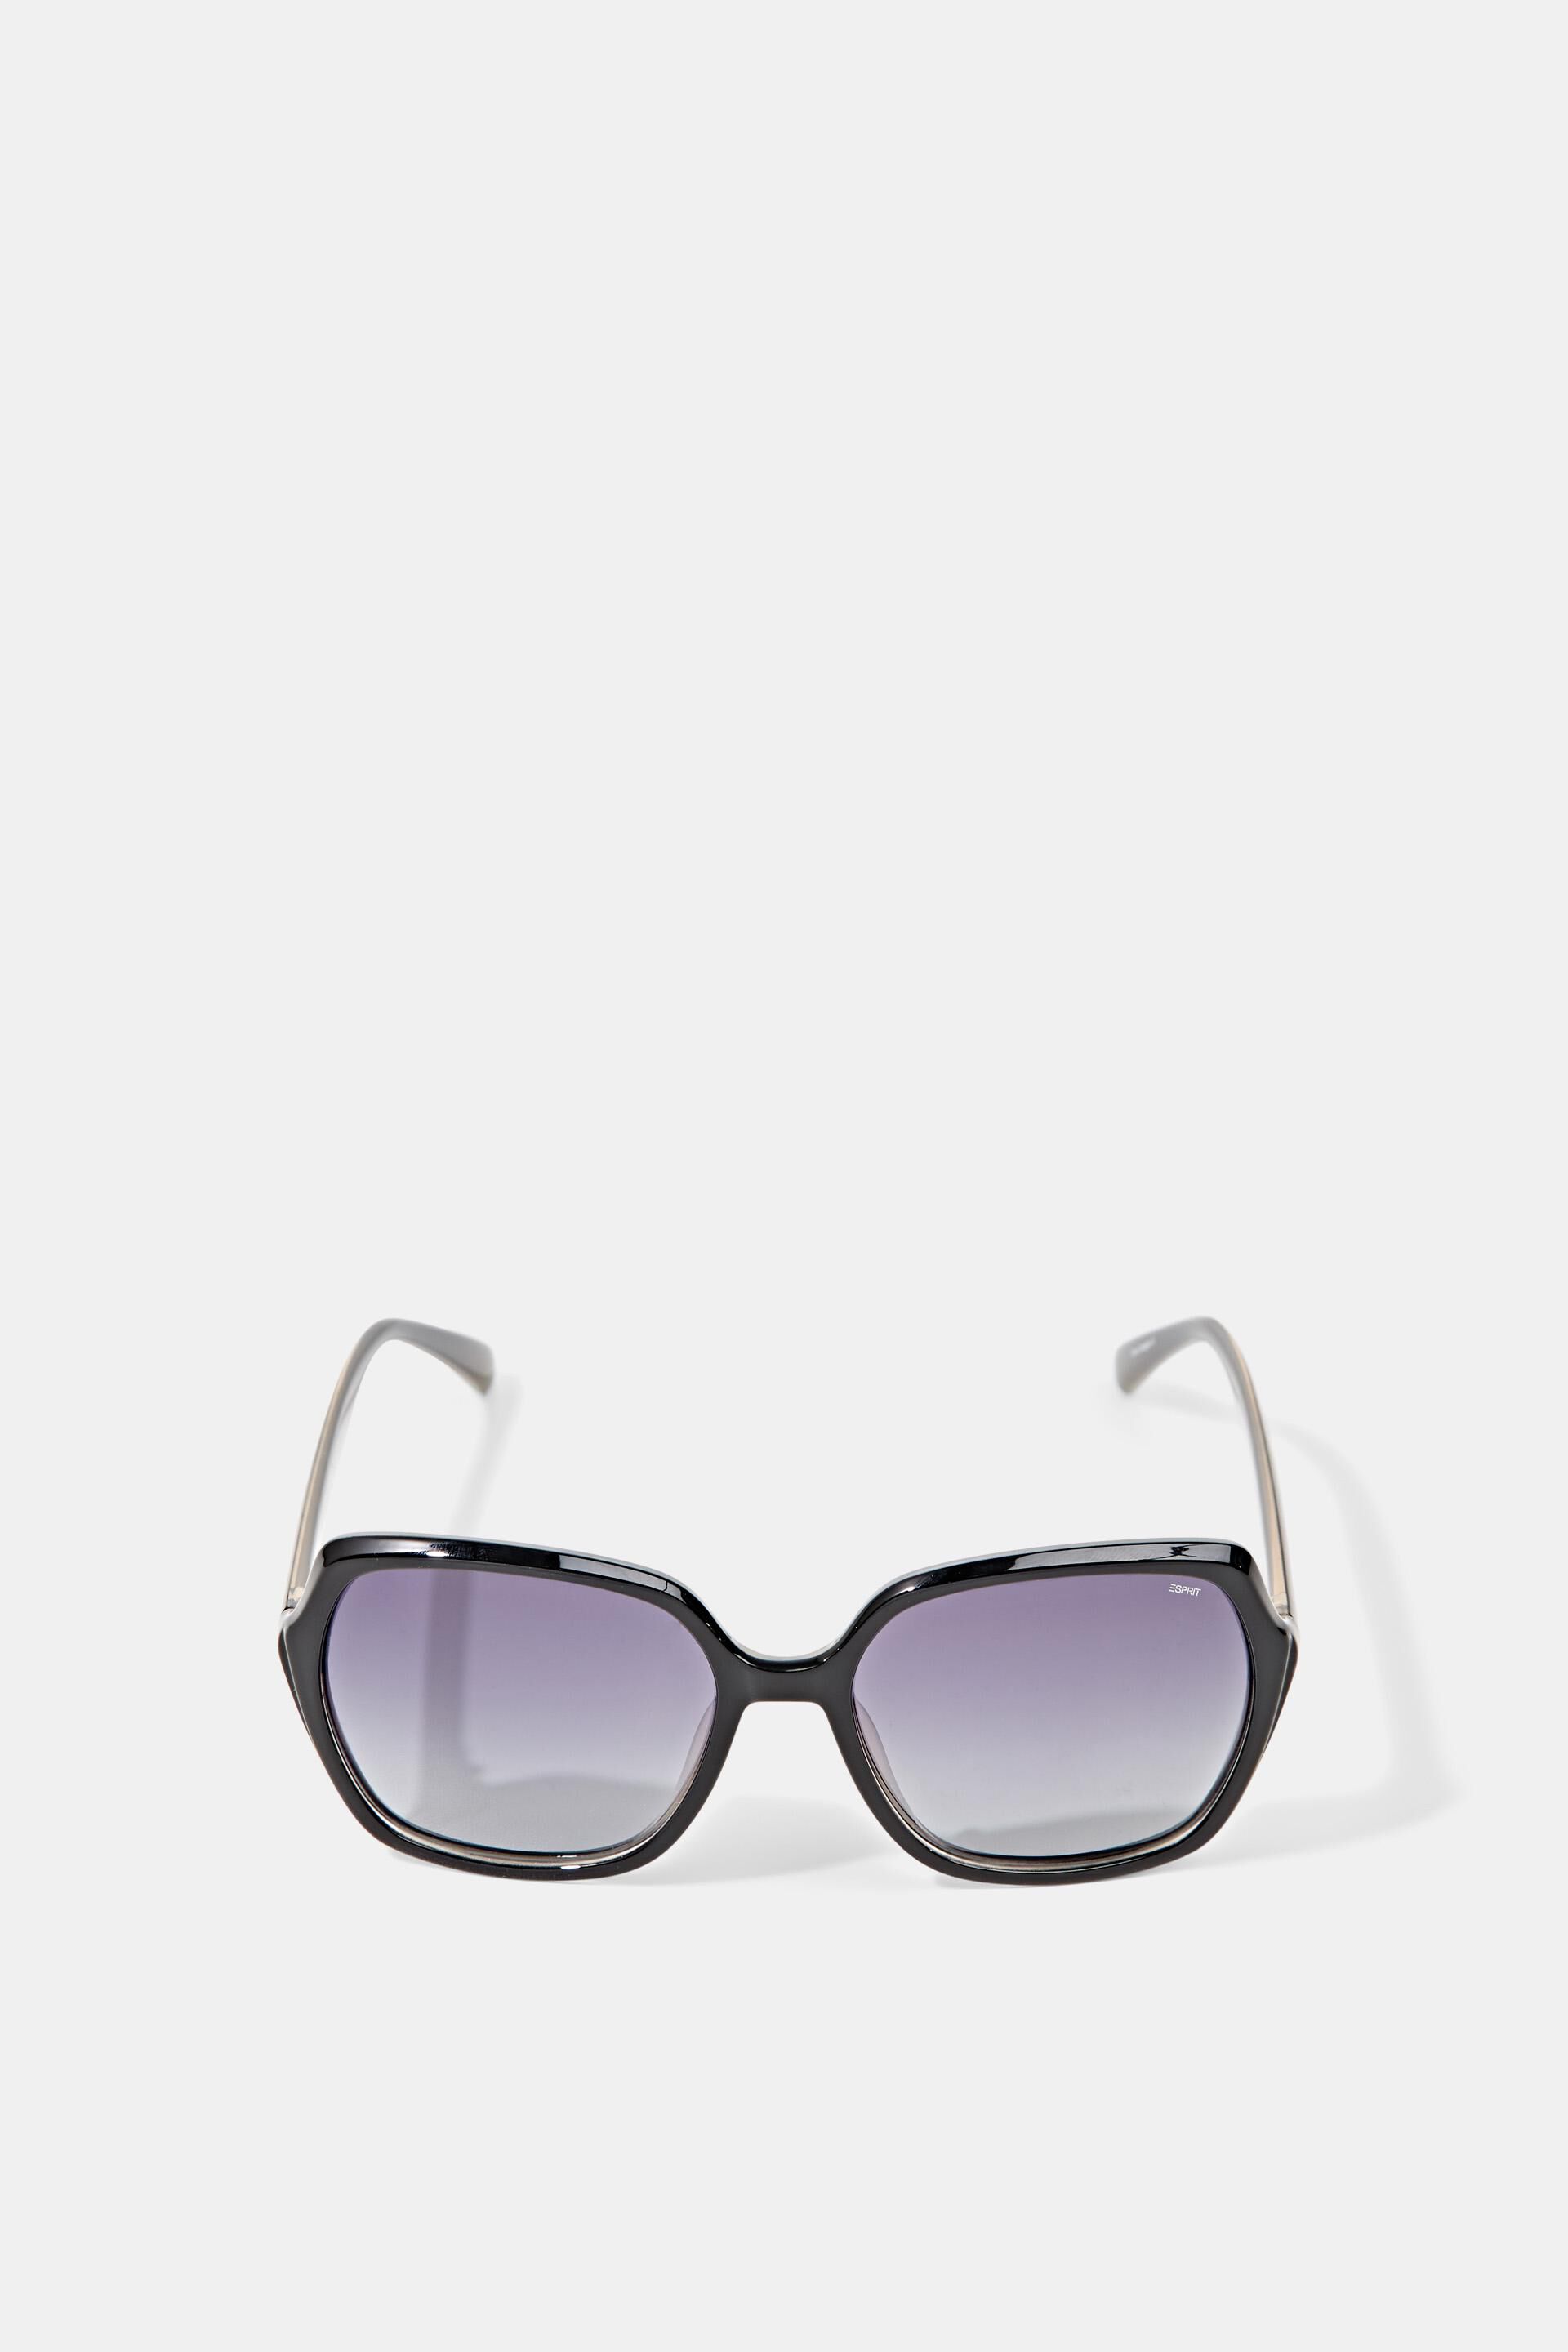 Esprit sunglasses with lenses large Statement